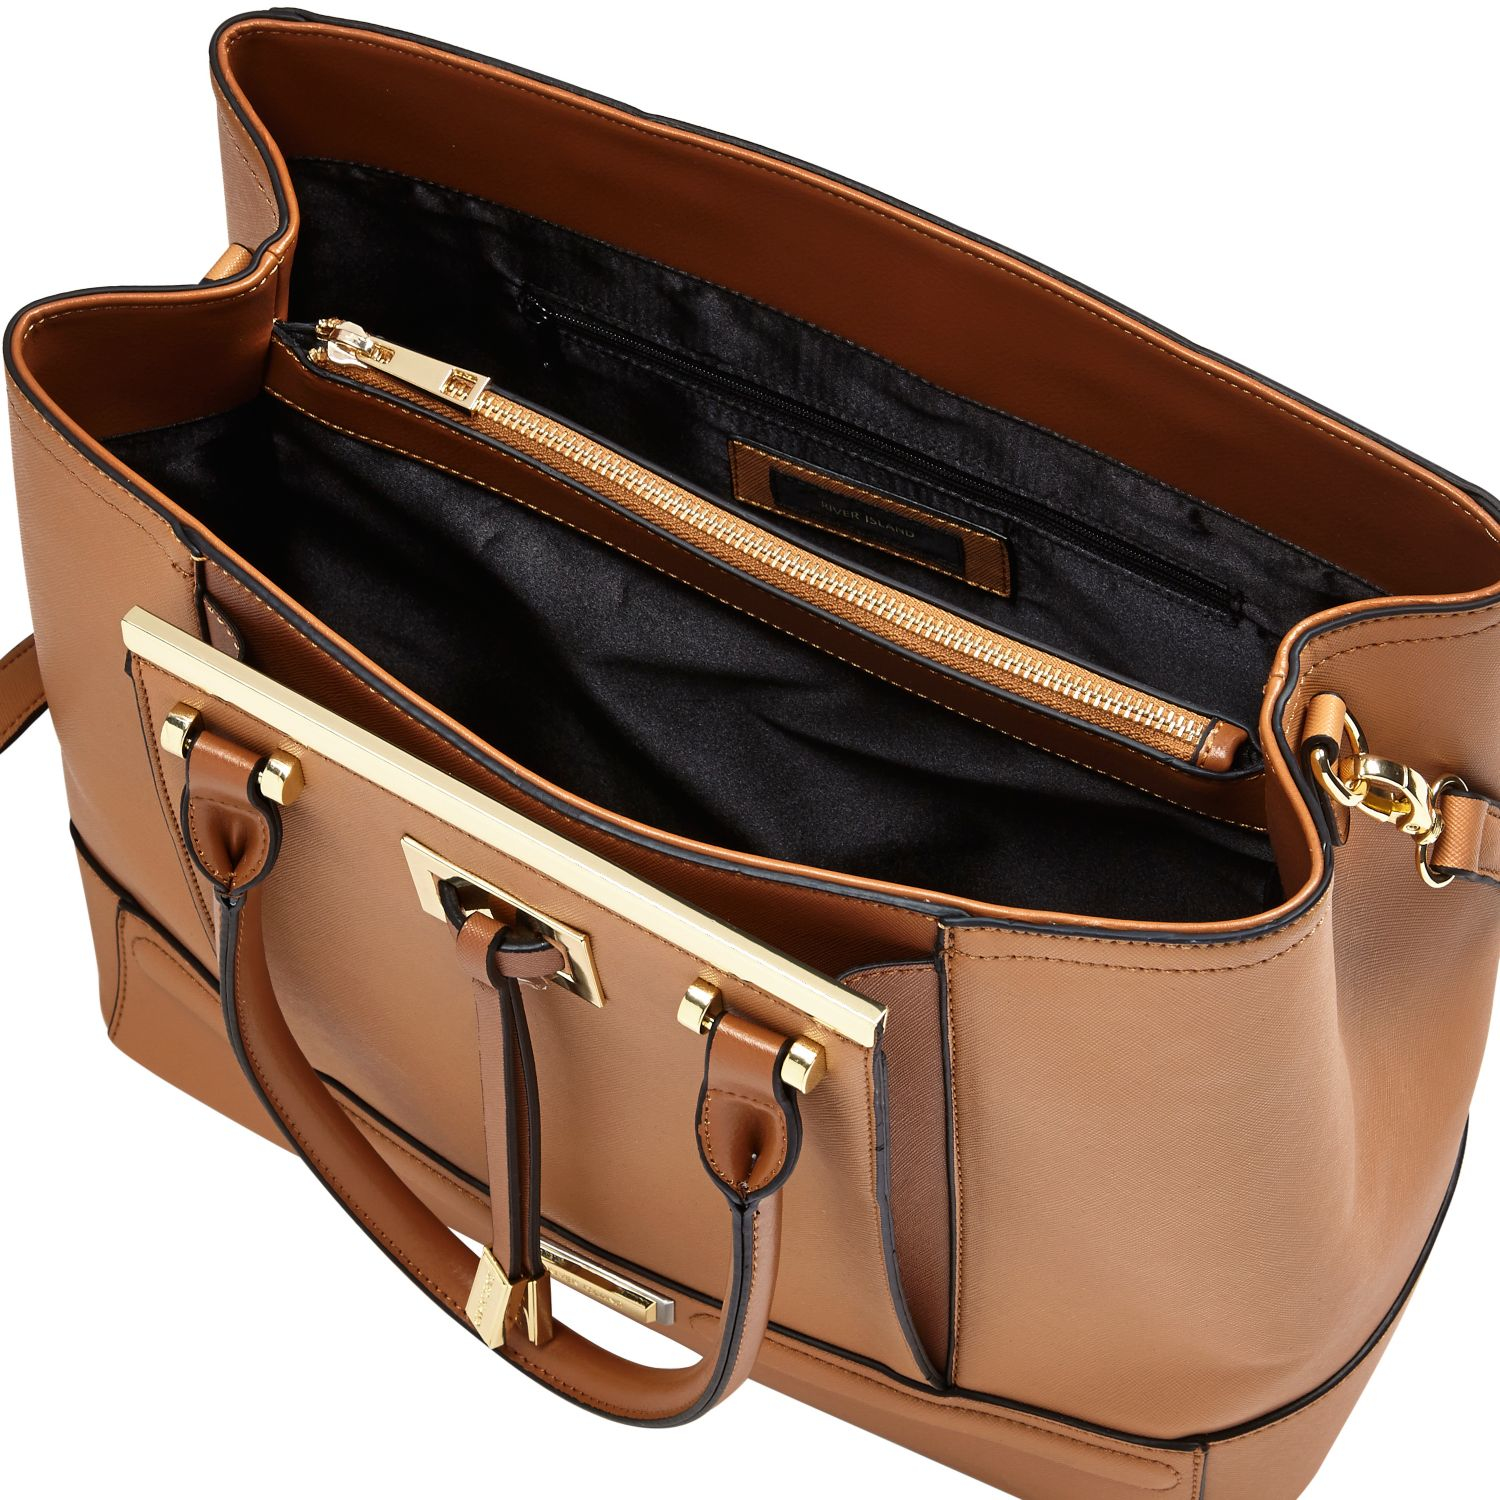 River Island Tan Tan Brown Structured Tote Handbag Product 0 919605334 Normal 